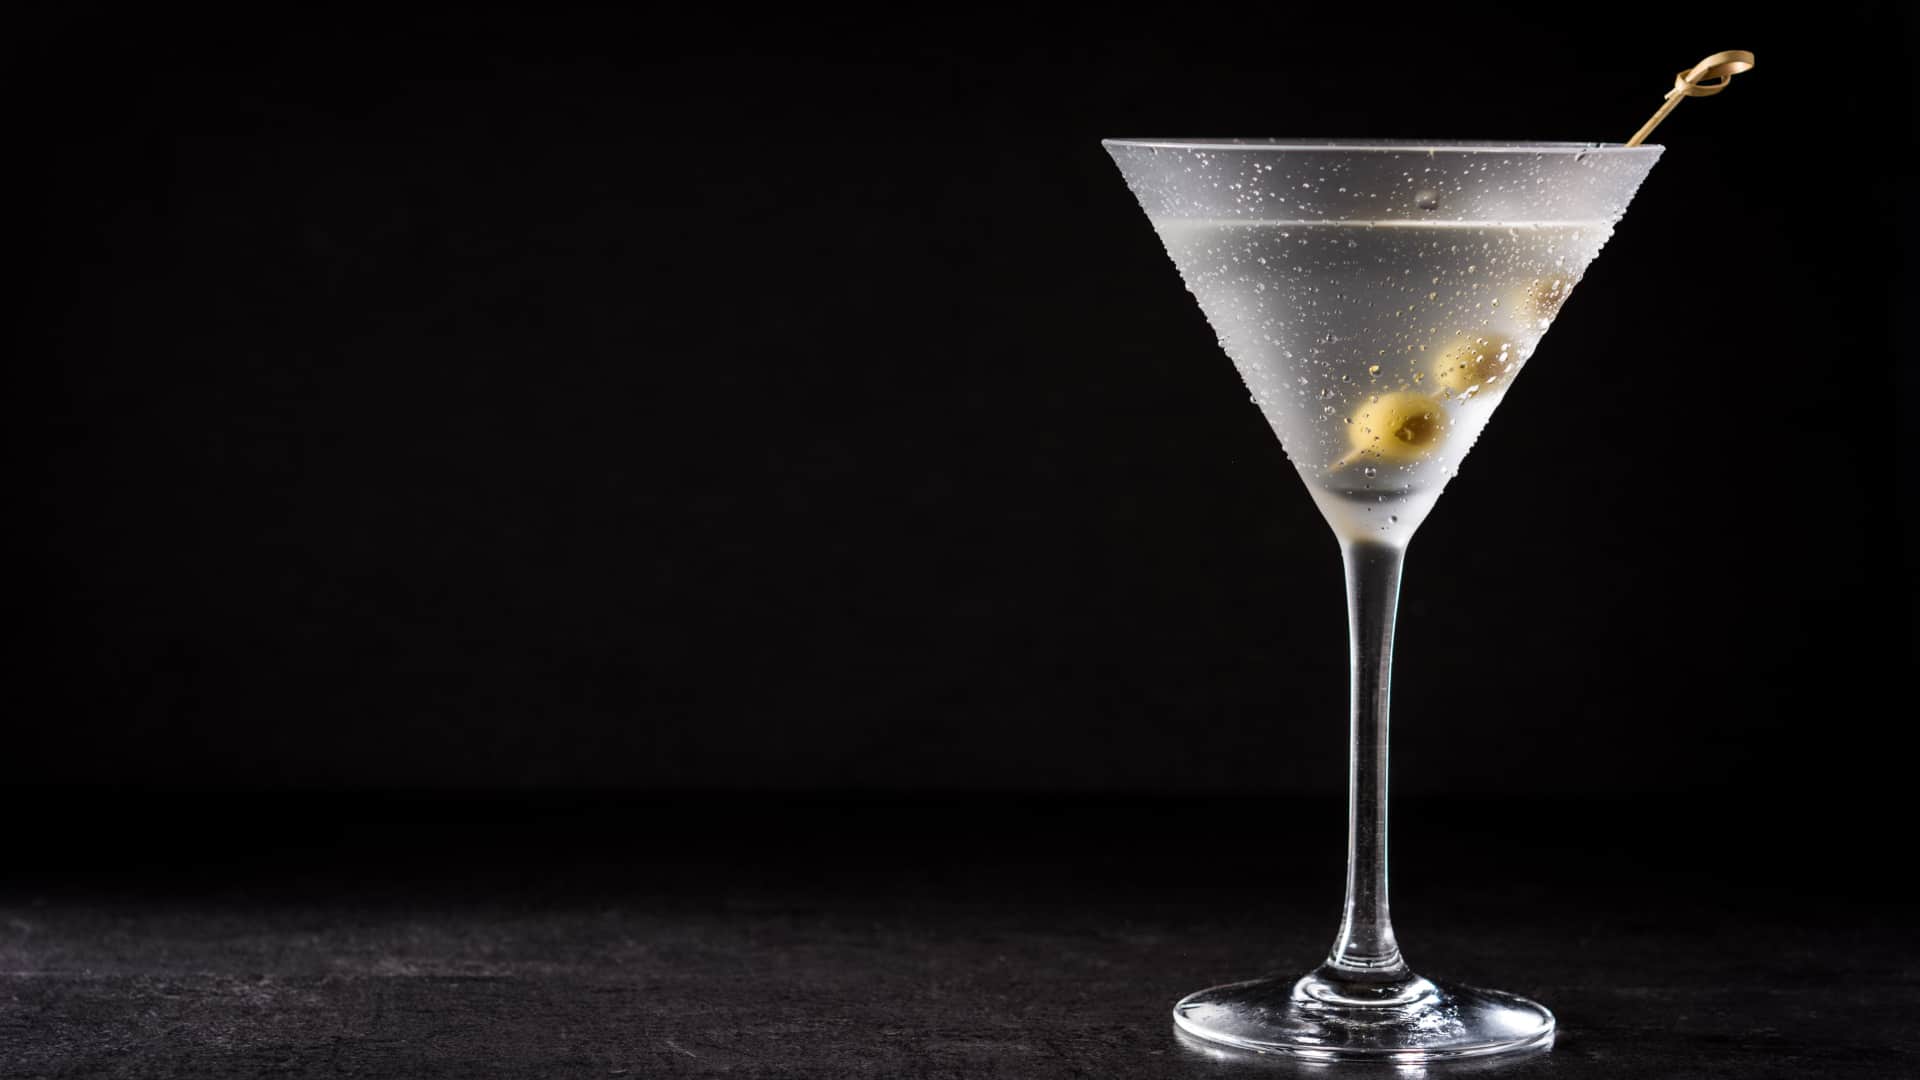 Martini (dry) drink recipe